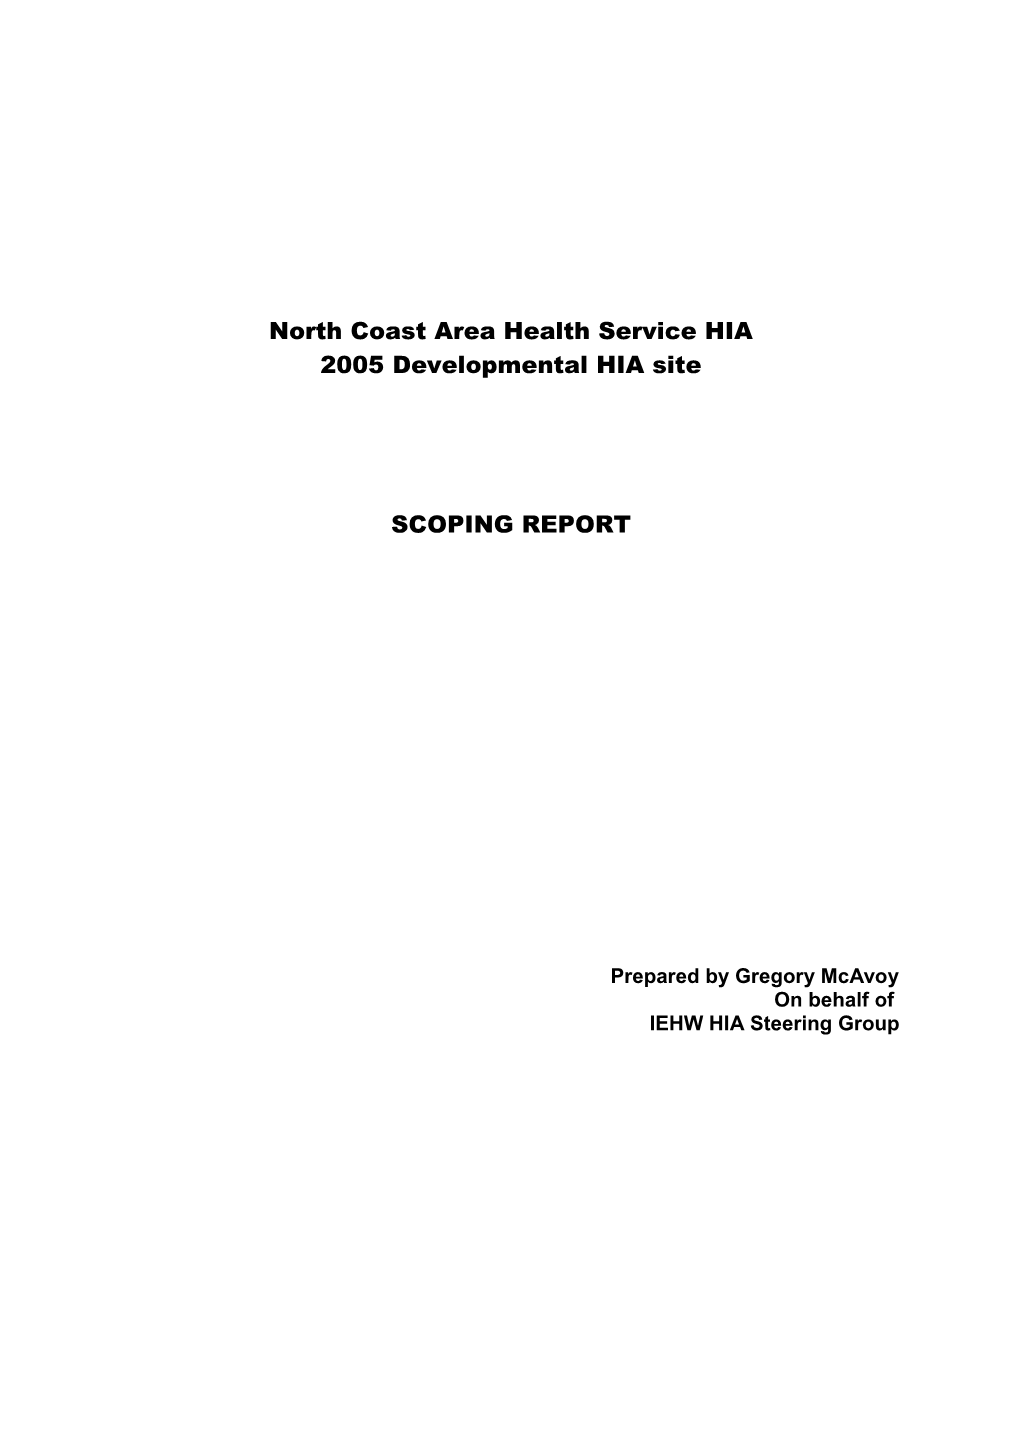 Northcoast Area Health Service HIA